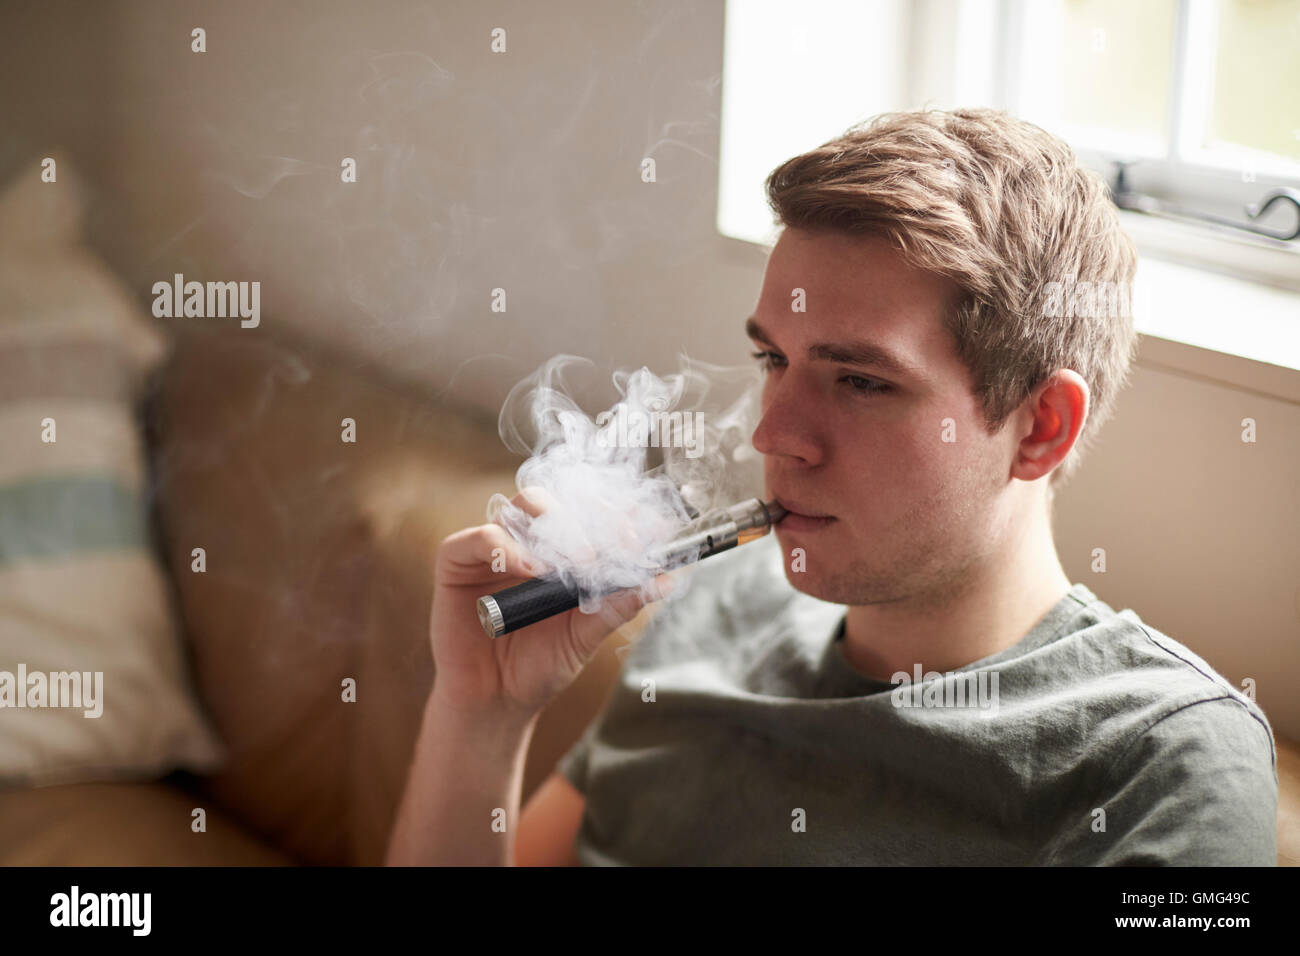 Young Man Using Vapourizer As Smoking Alternative Stock Photo